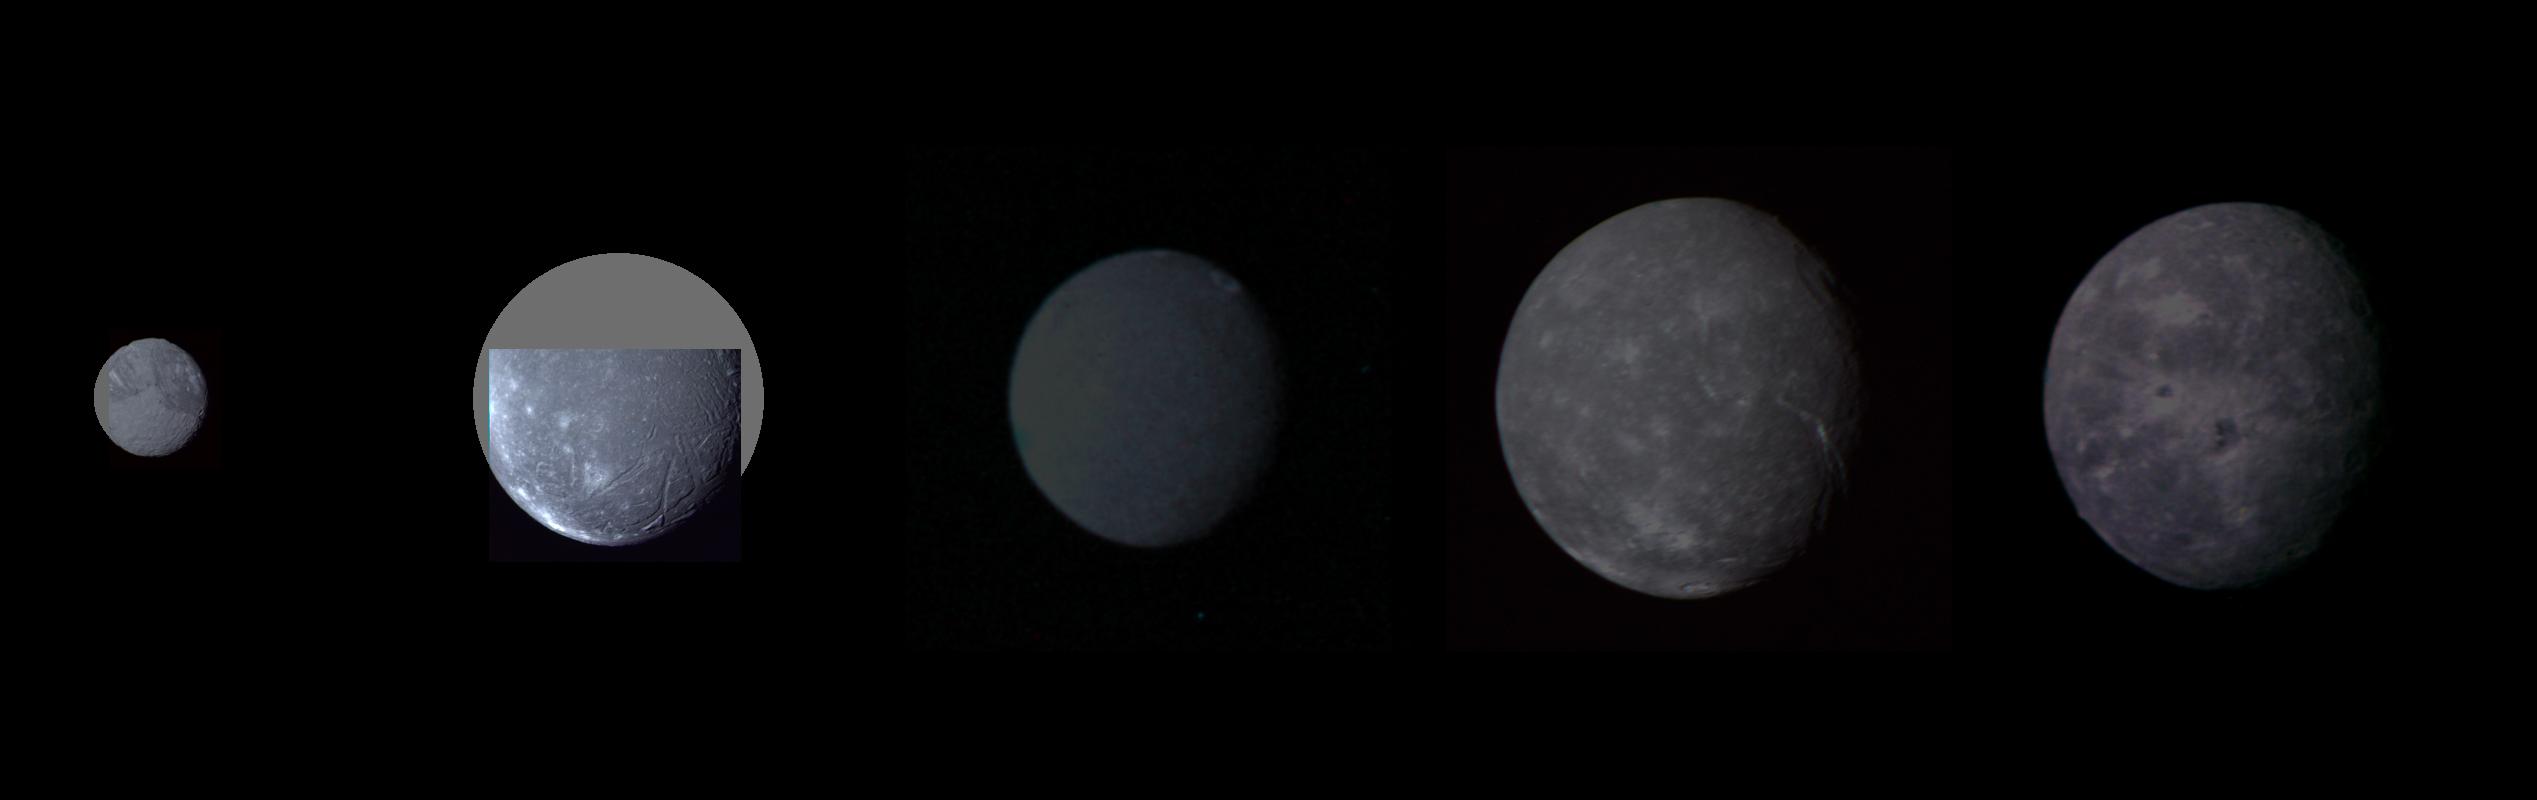 Uranus Moon's